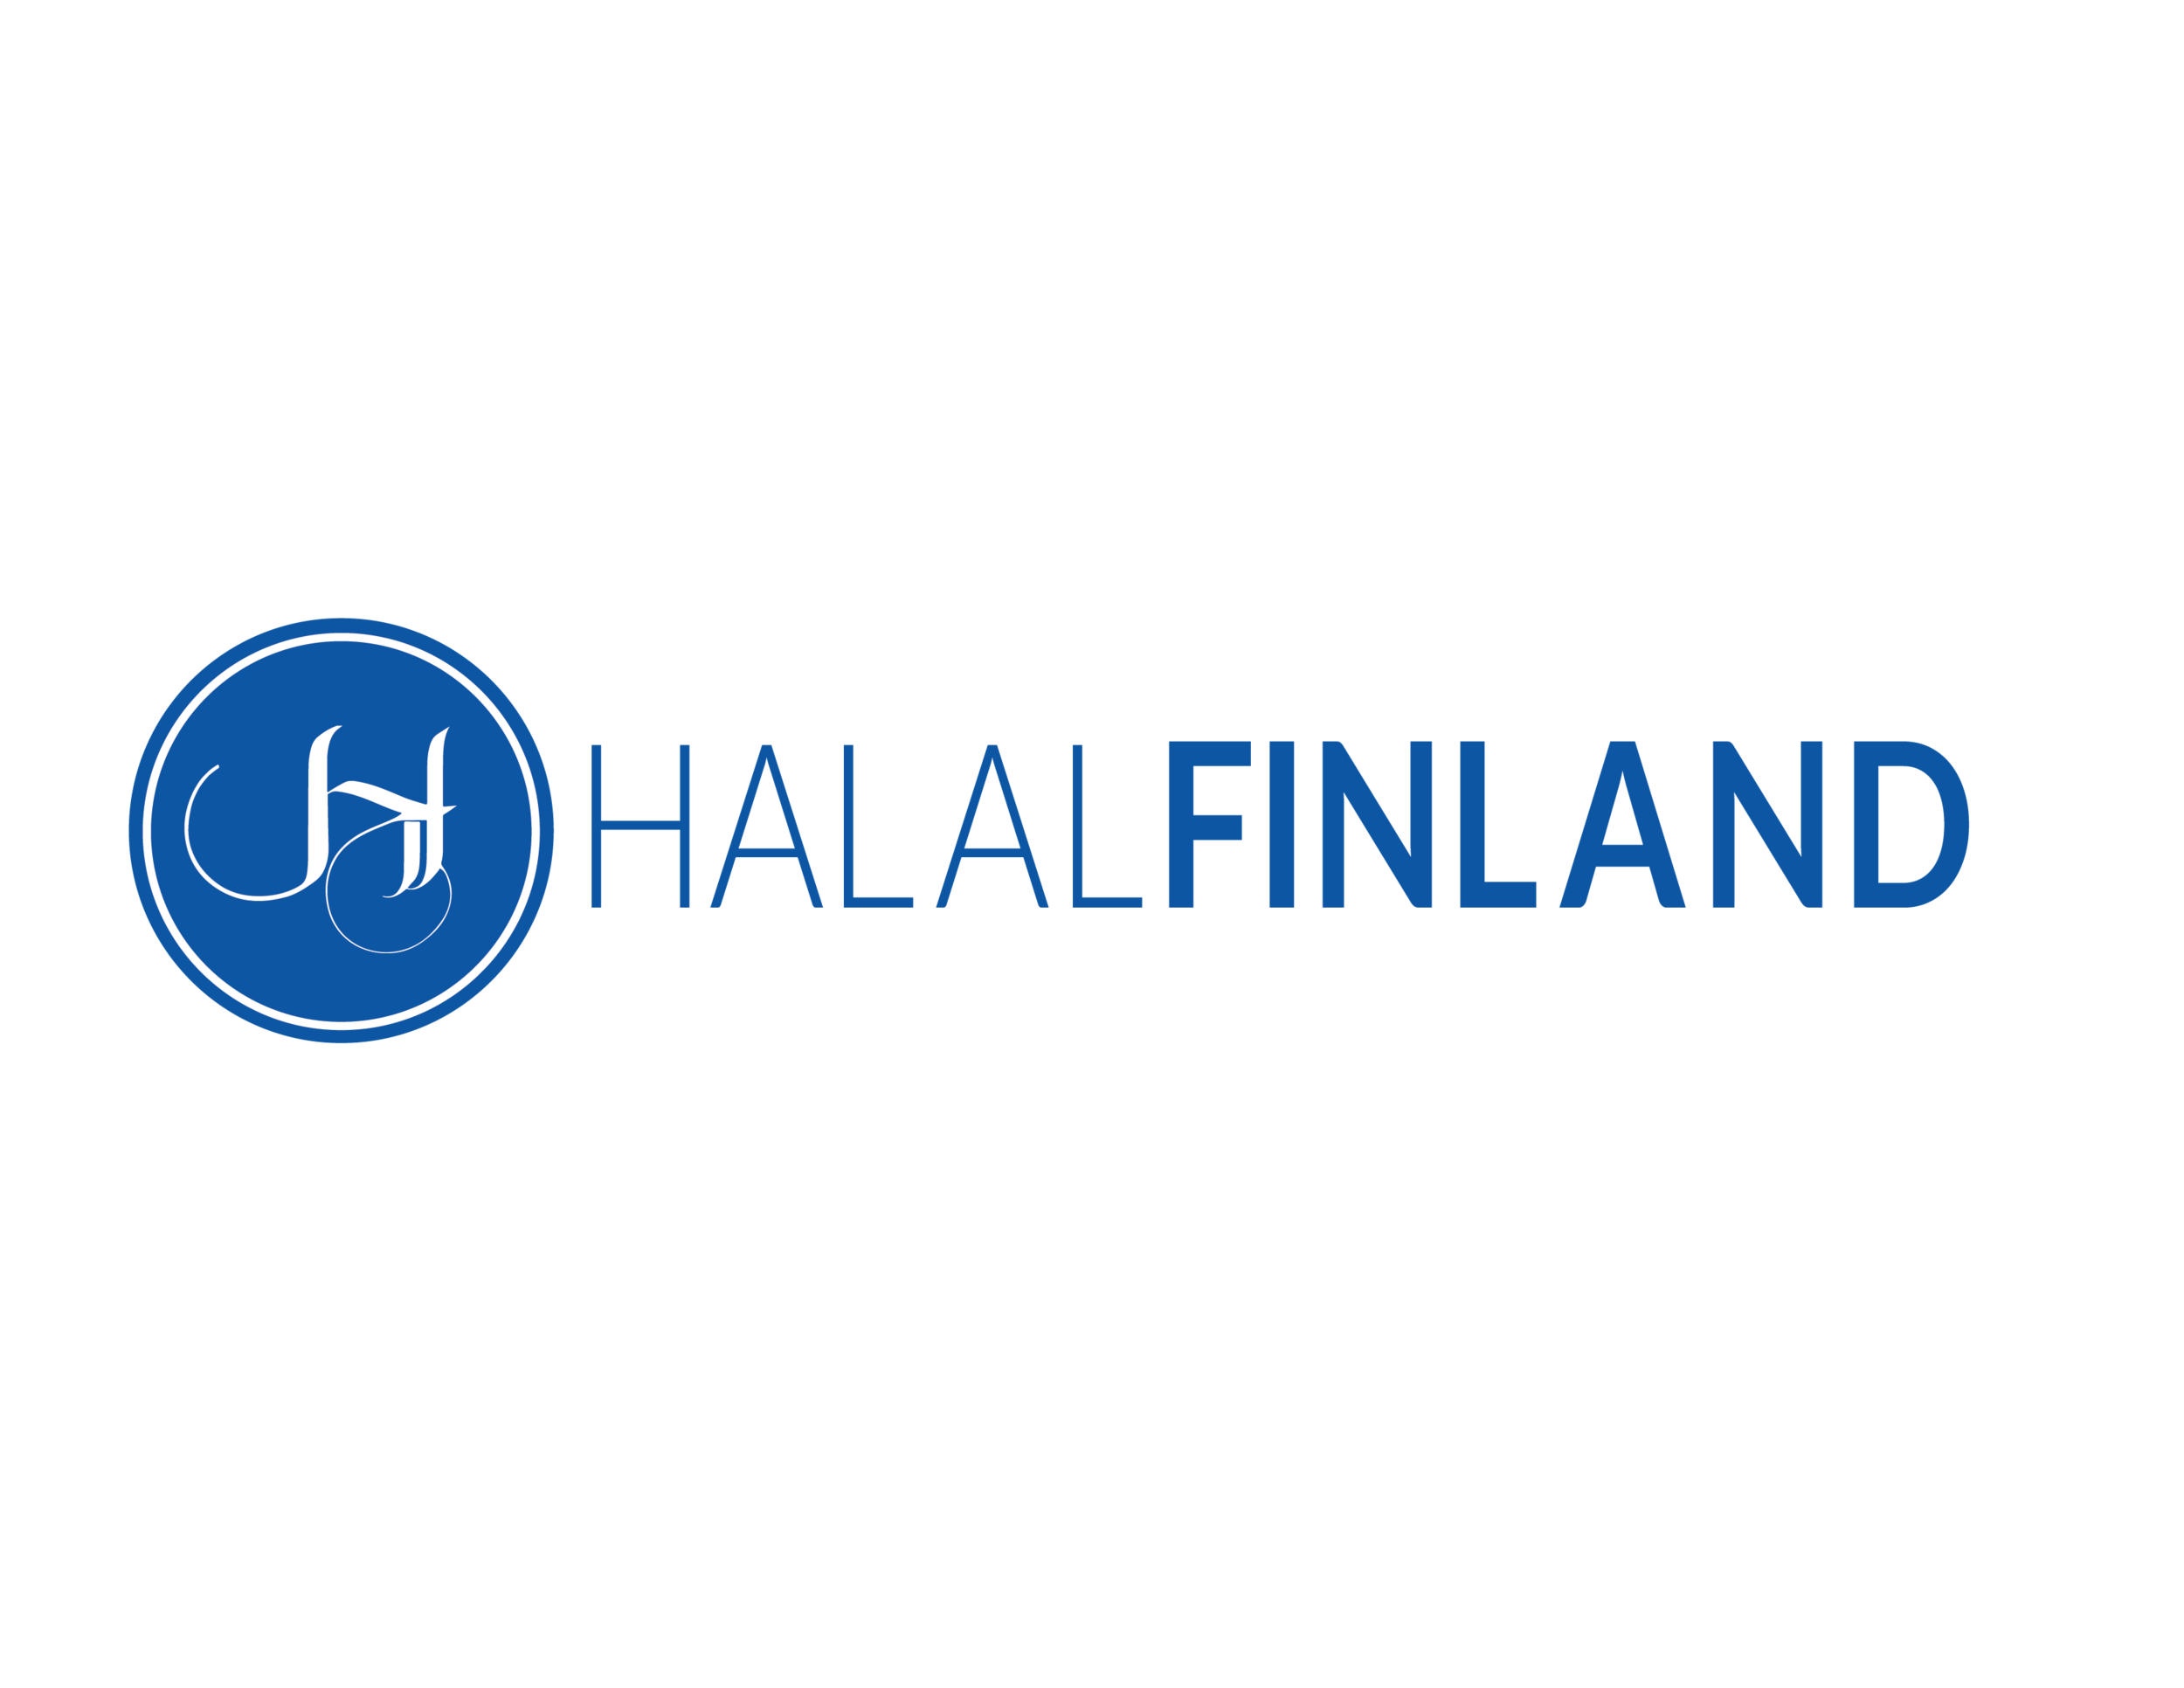 Halal Finland